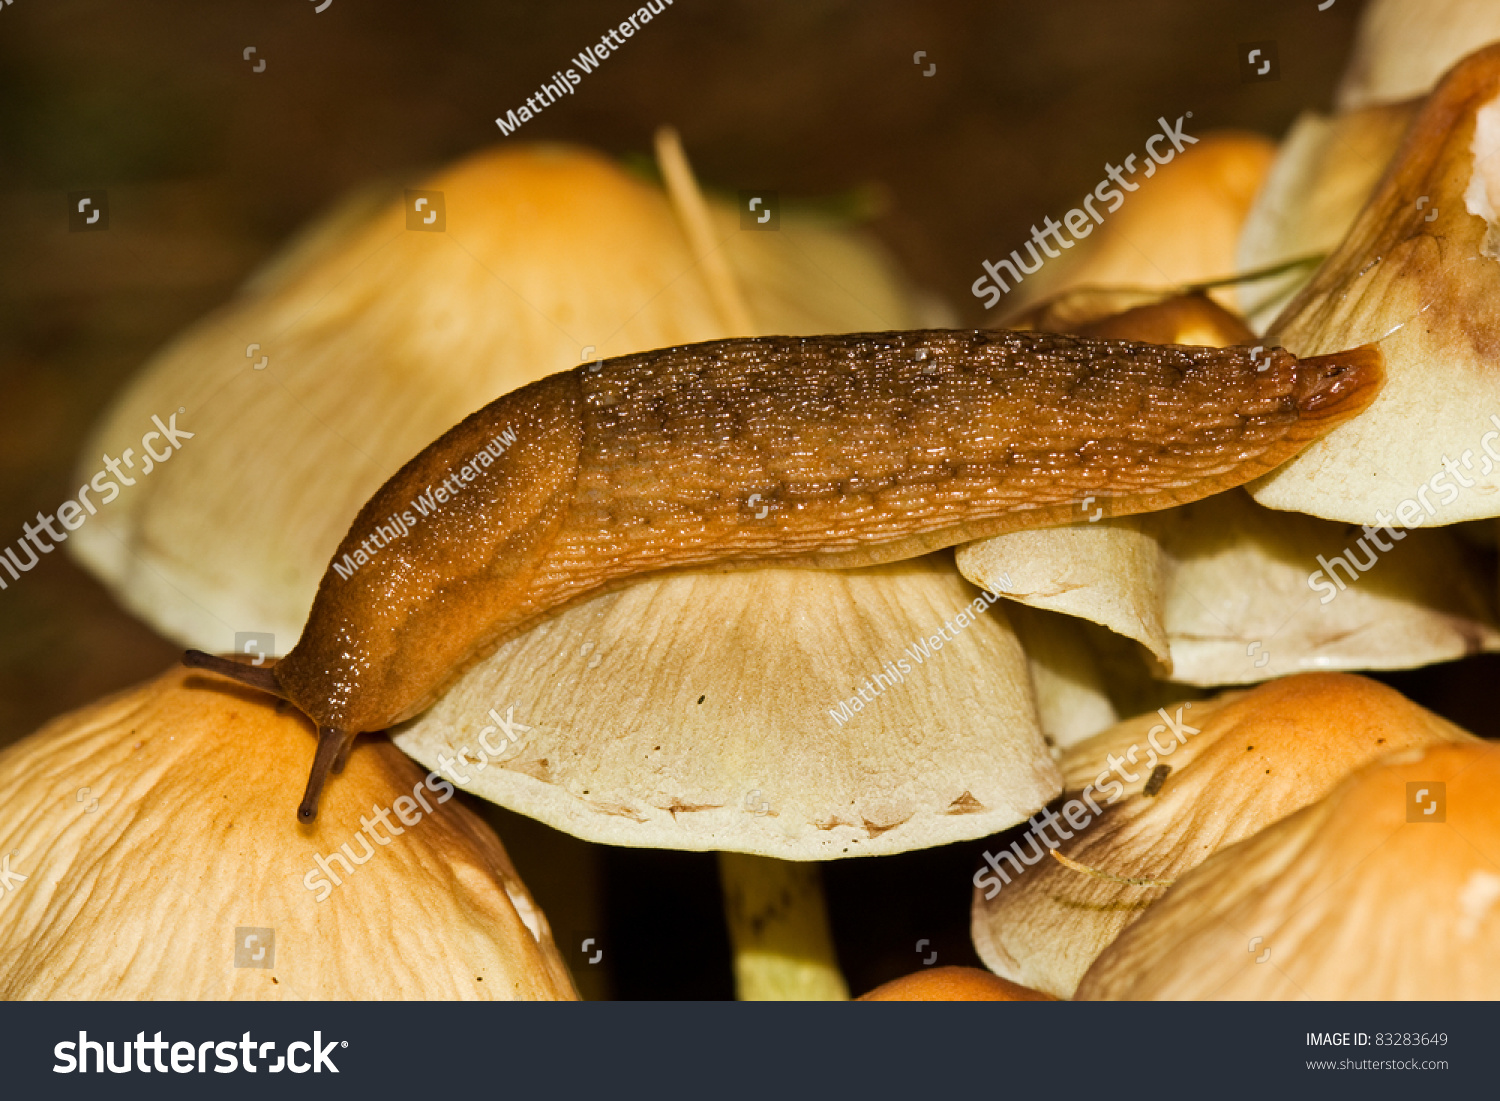 A brown slug, feeding on Sulphur Tuft (Hypholoma fasciculare) #83283649